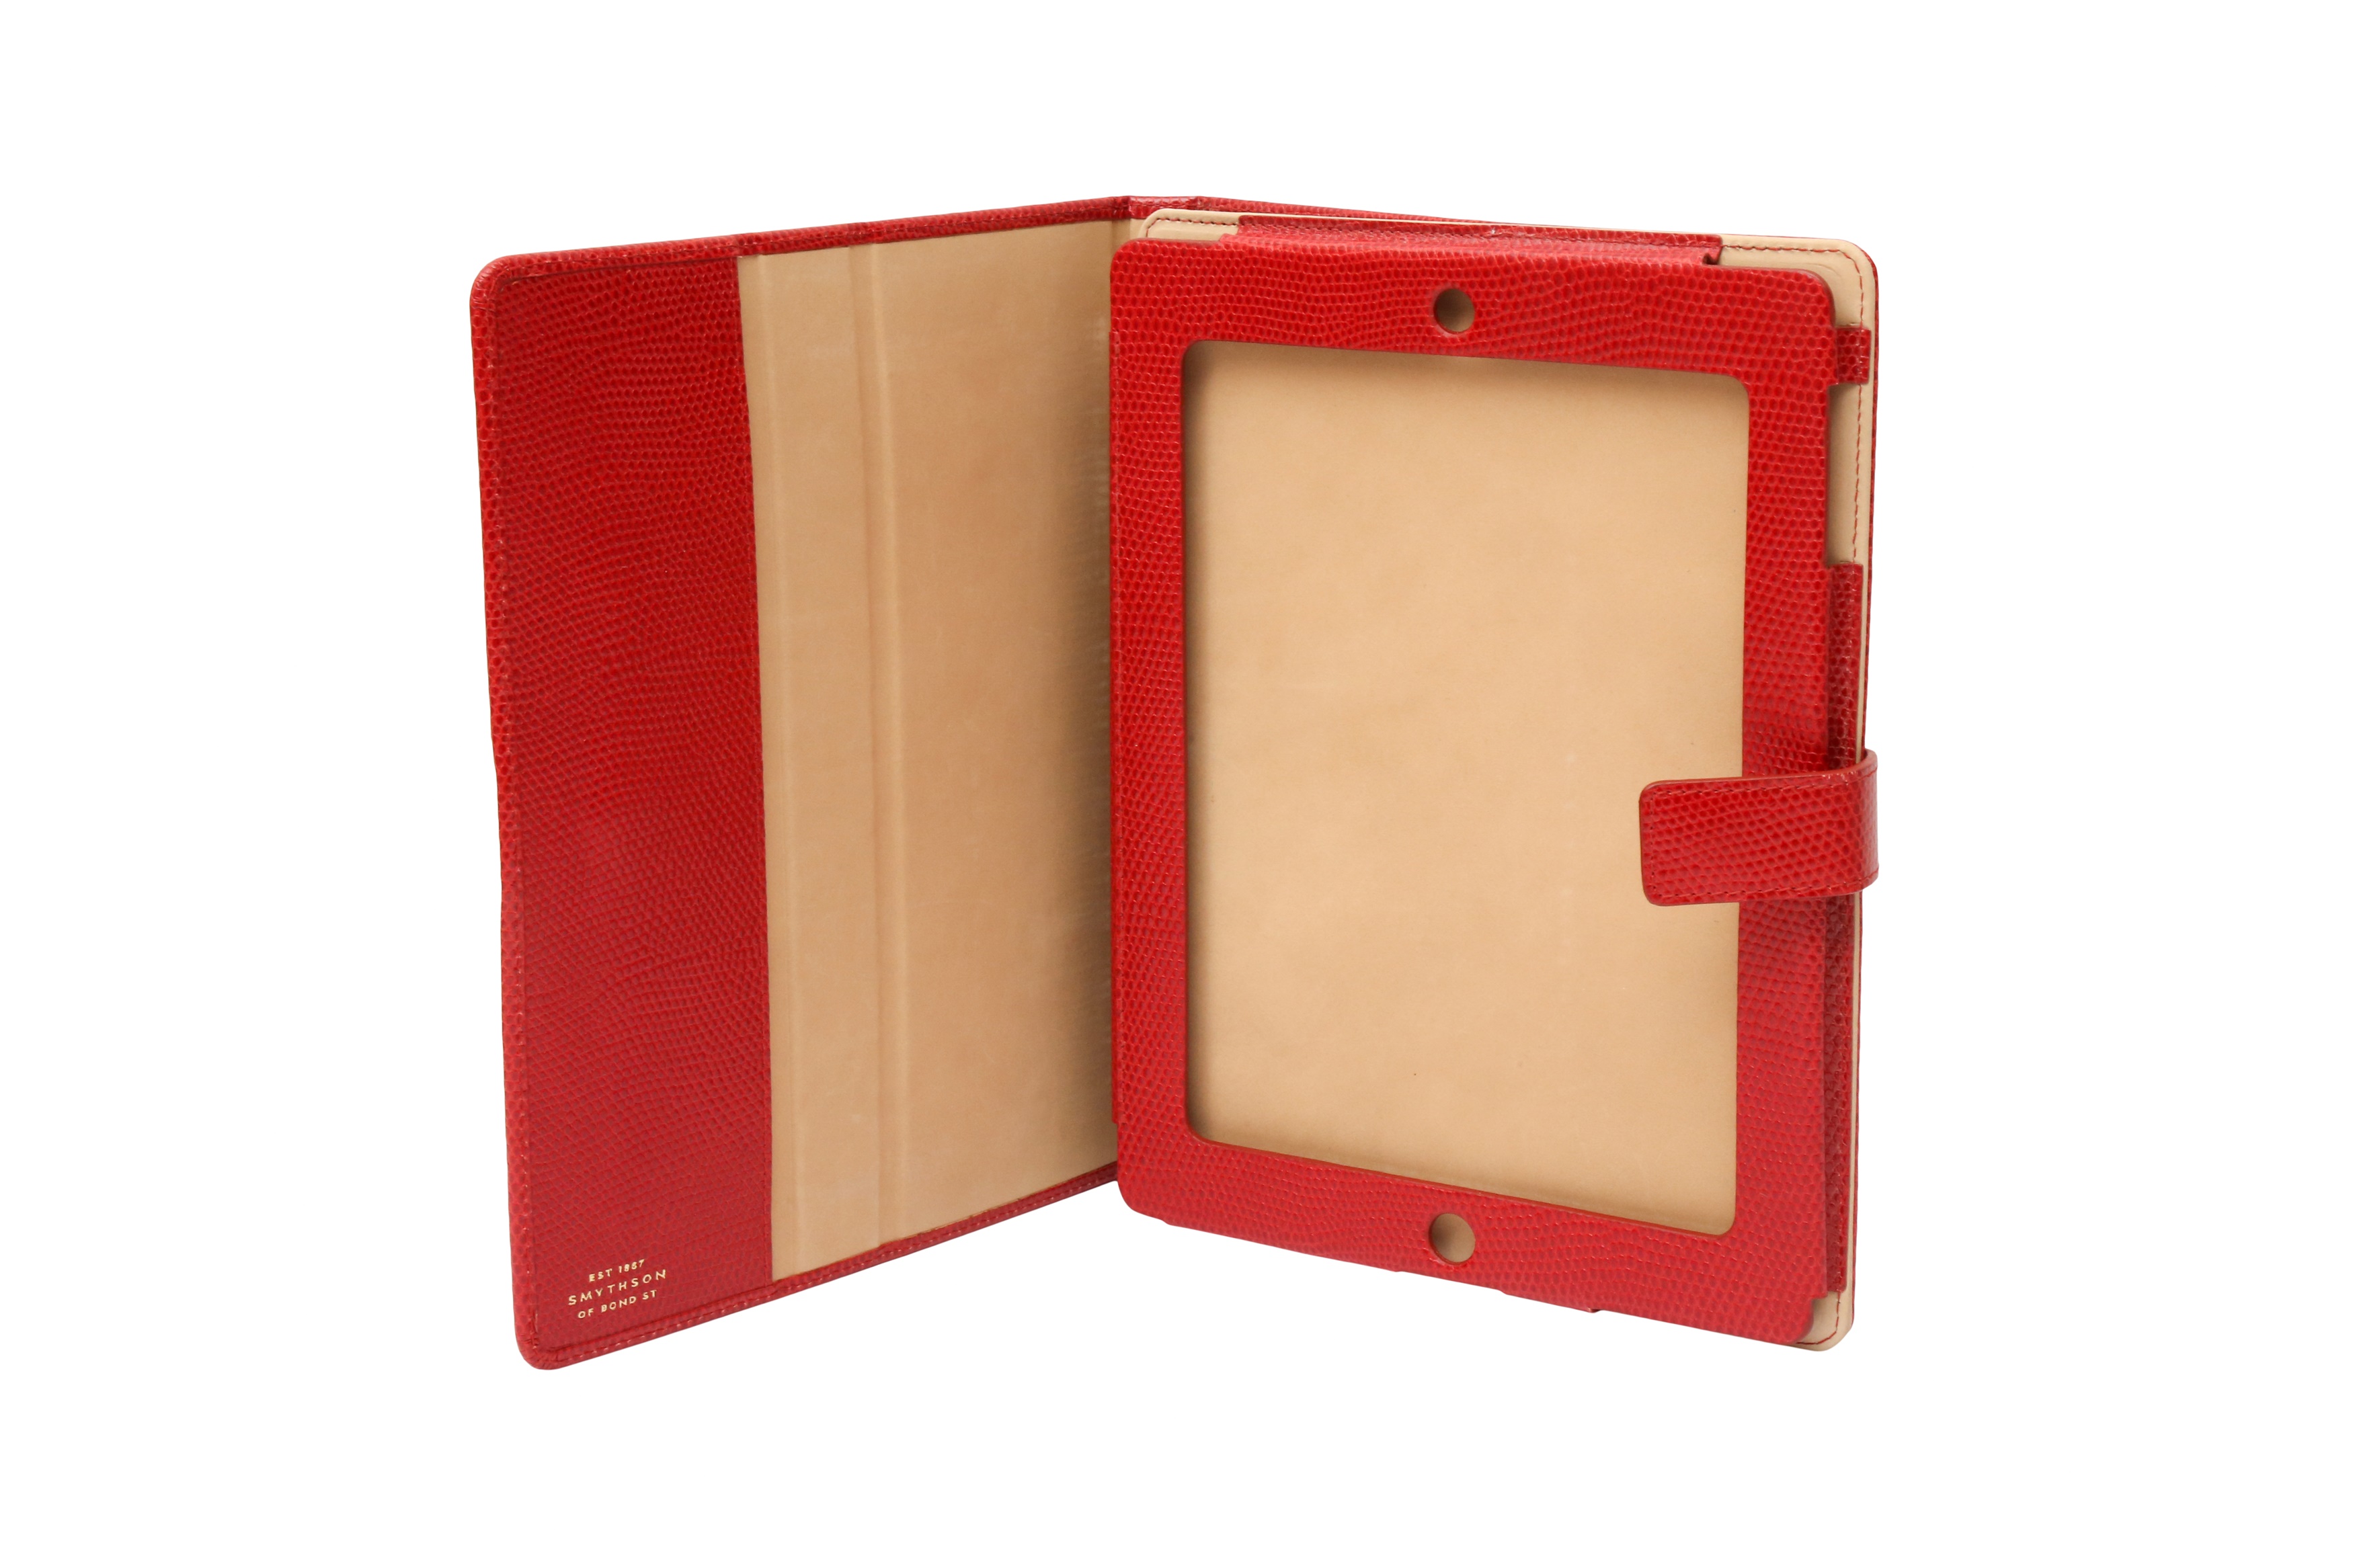 Smythson Red Lizard iPad Case - Image 3 of 3